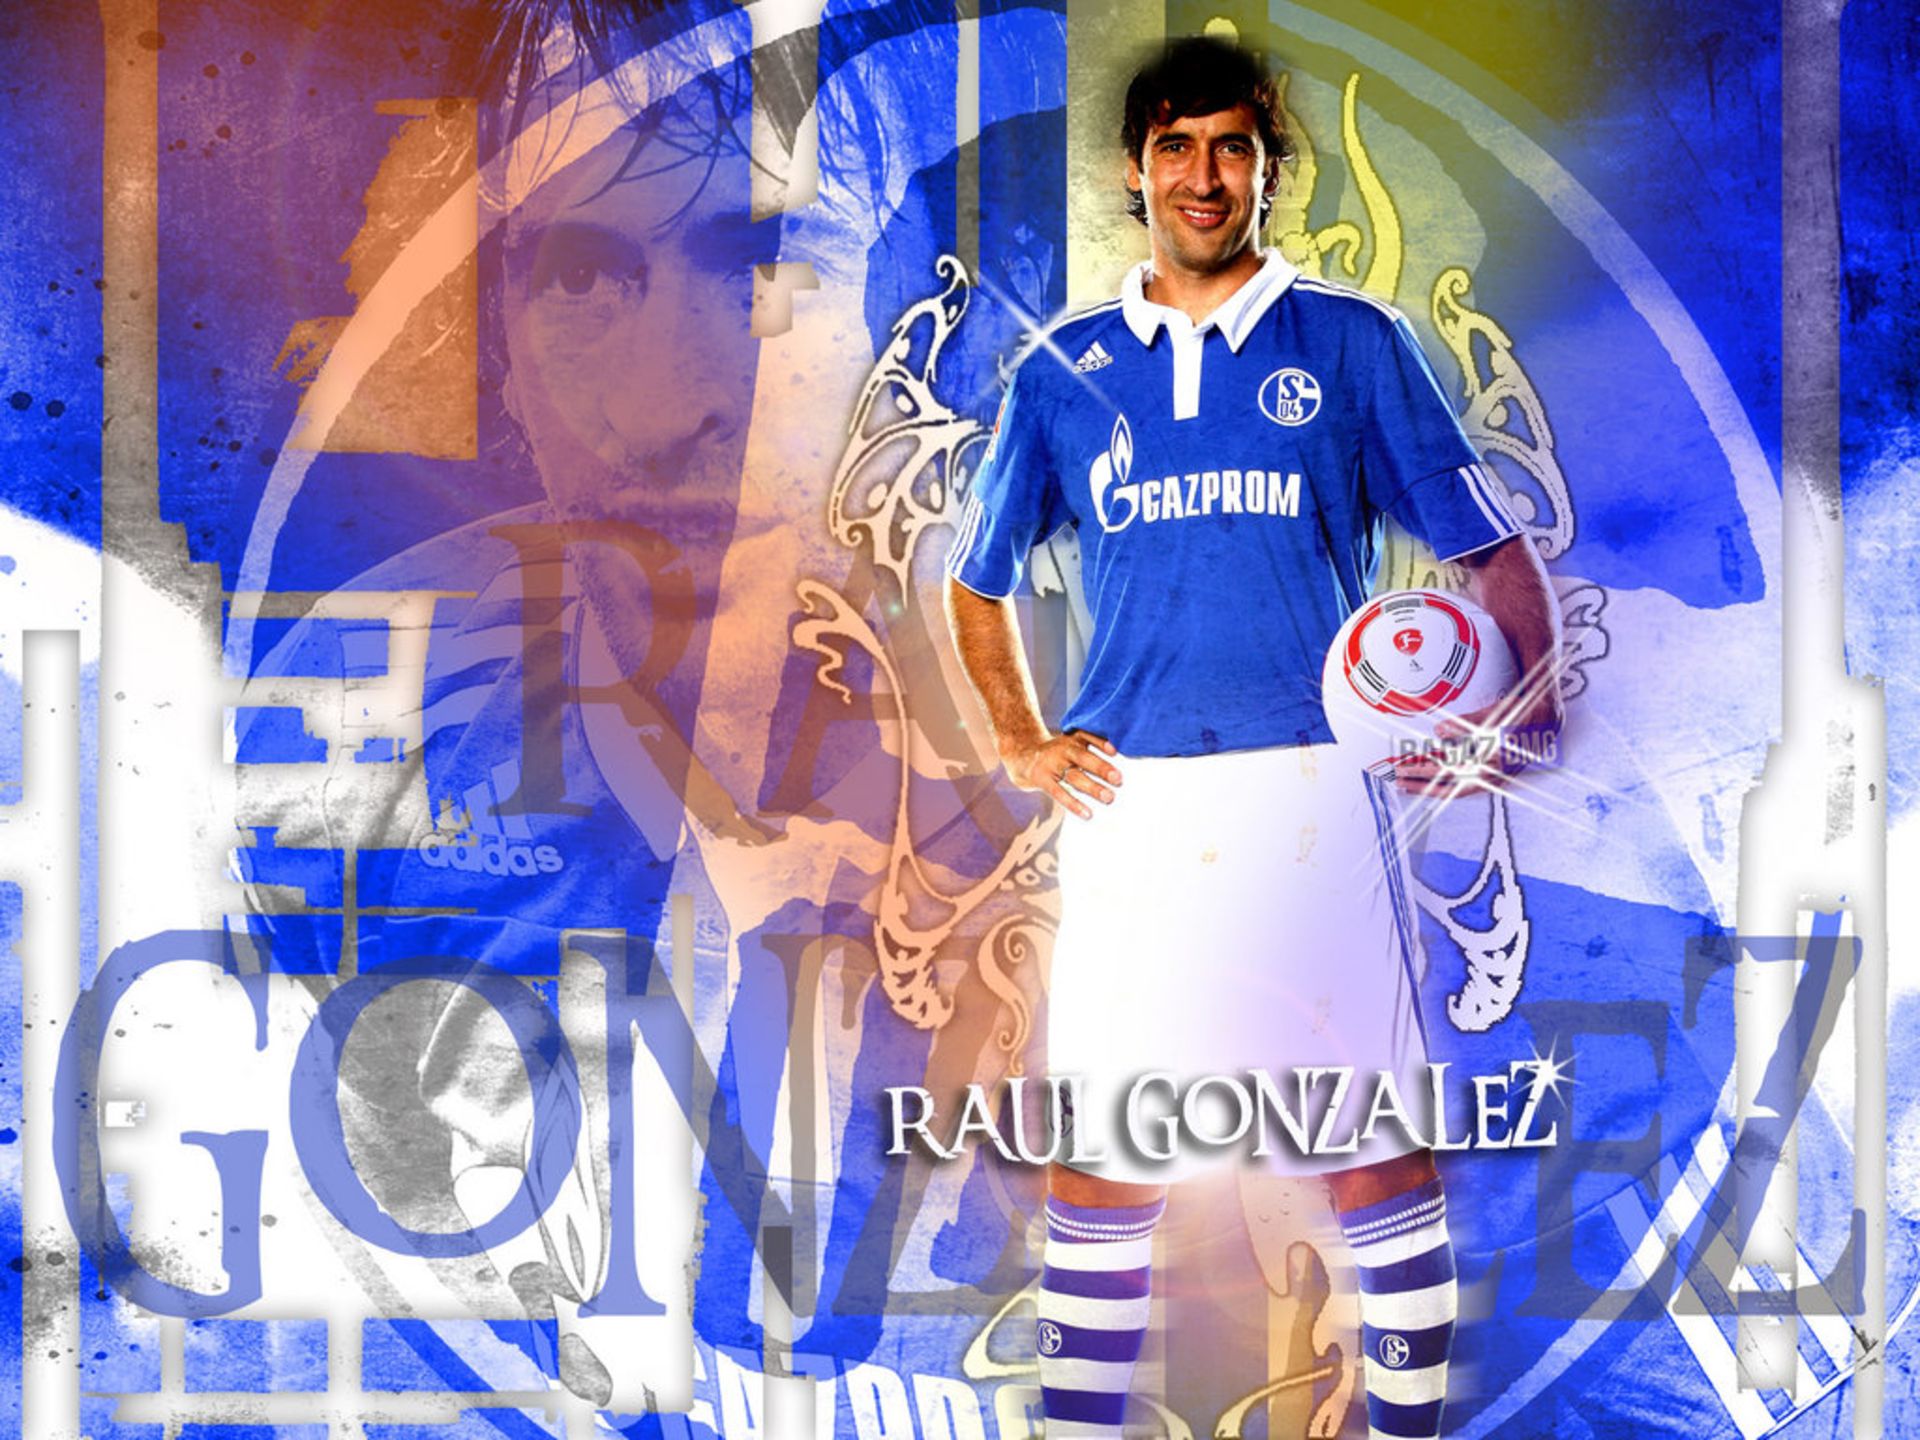 Download mobile wallpaper Sports, Soccer, Raúl González Blanco, Fc Schalke 04 for free.